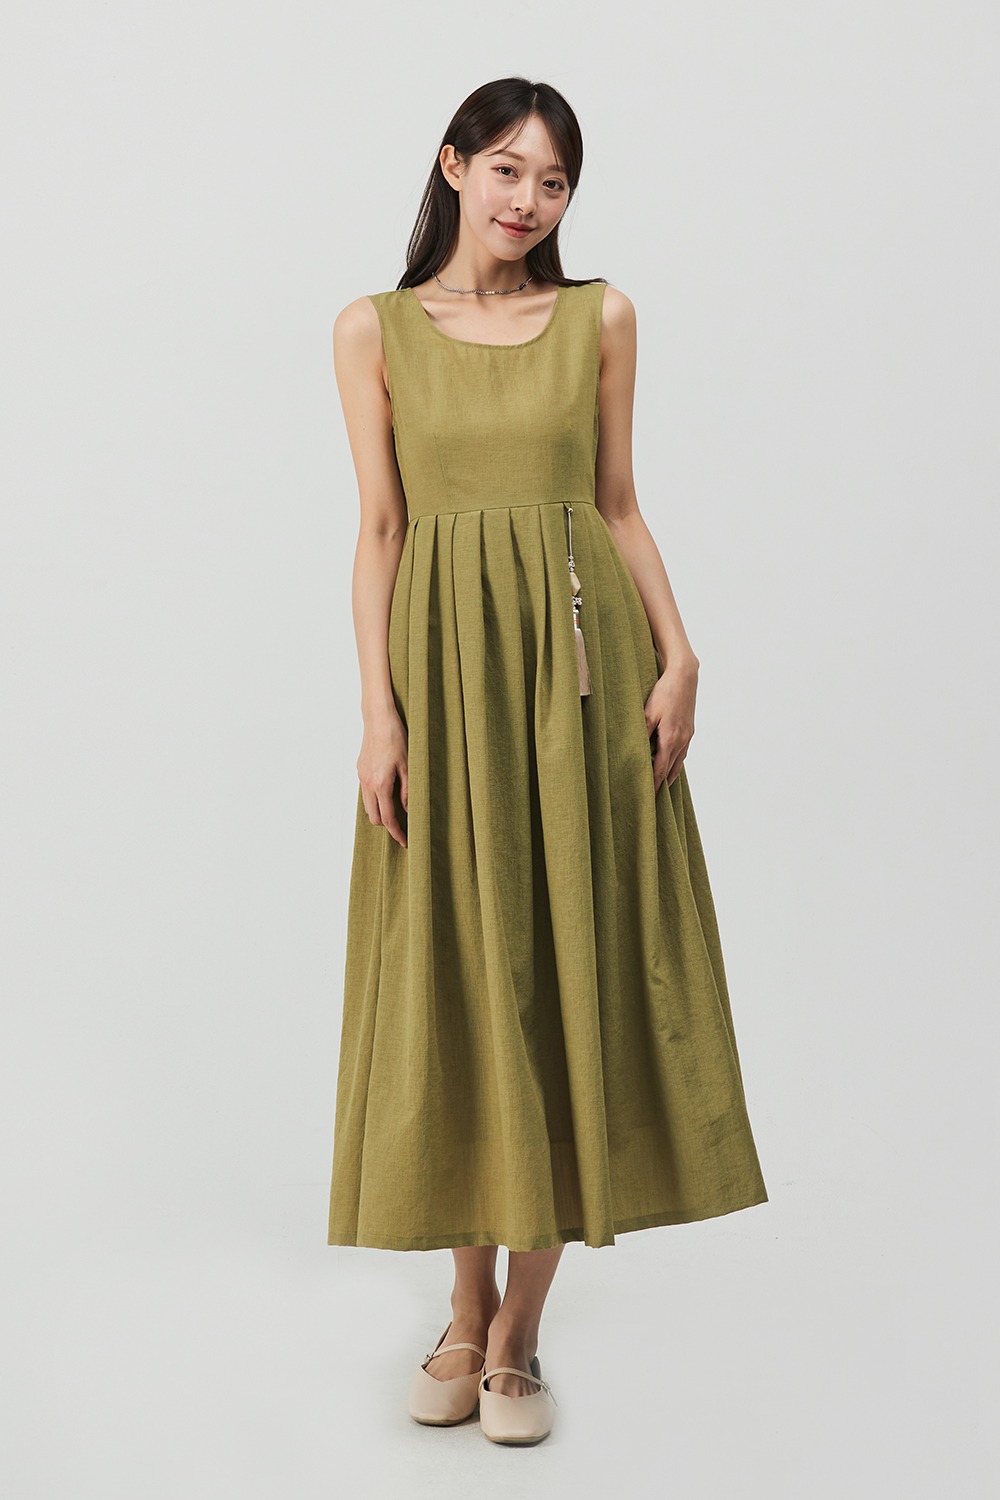 Fairytale Dress [Green apple]